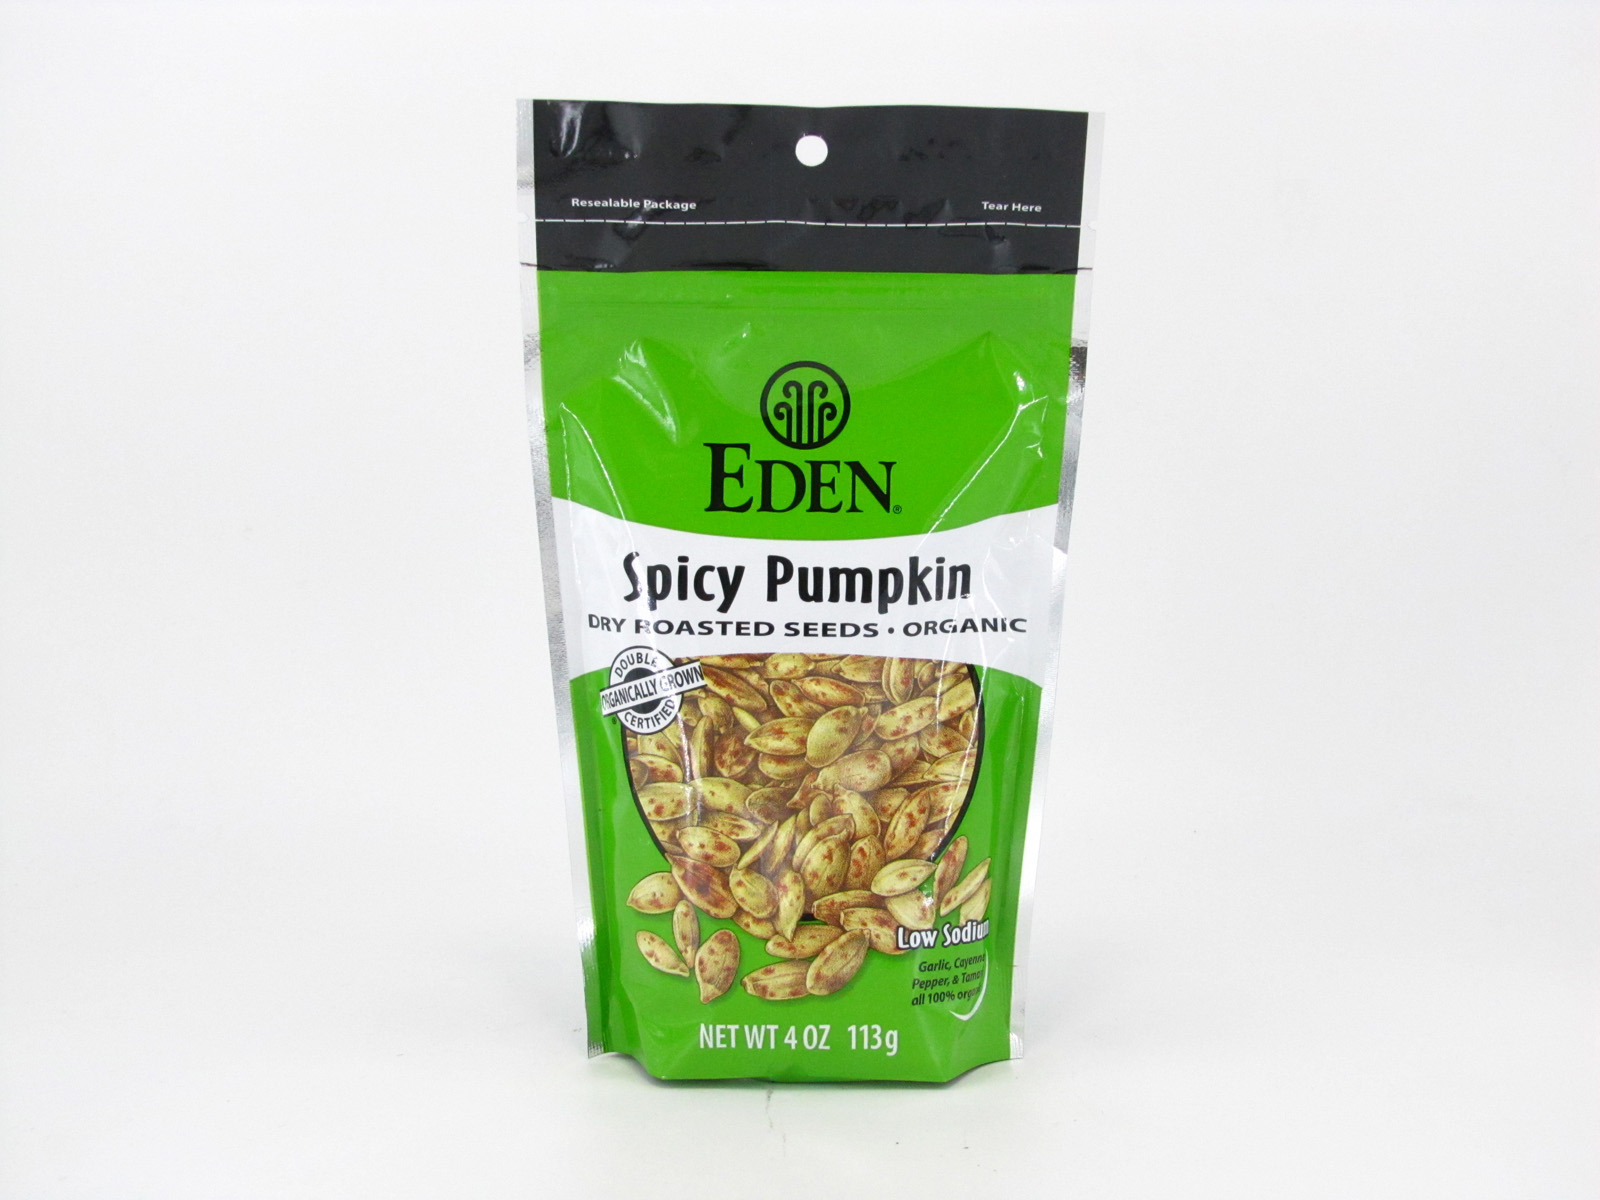 Eden Pumpkin Seeds - Spicy - front view